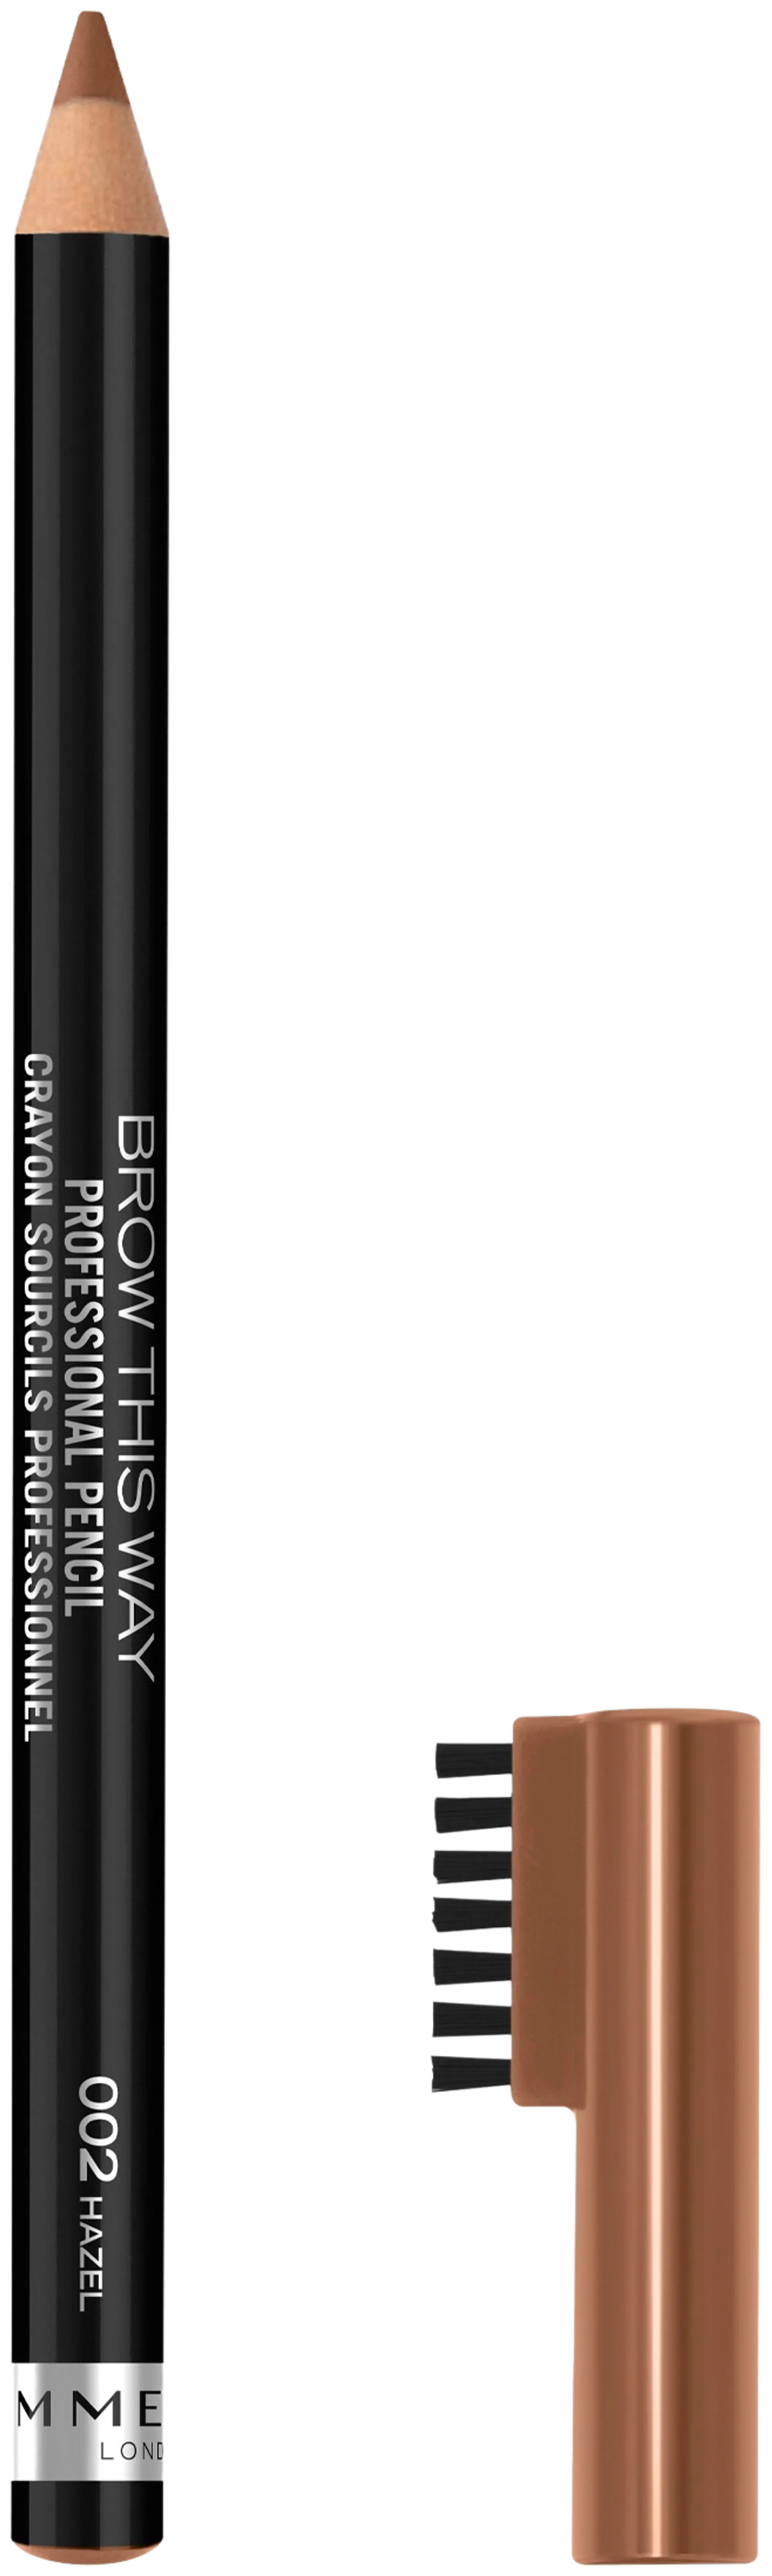 Rimmel 1,4g Professional Eyebrow Pencil 002 Hazel kulmakynä - 2